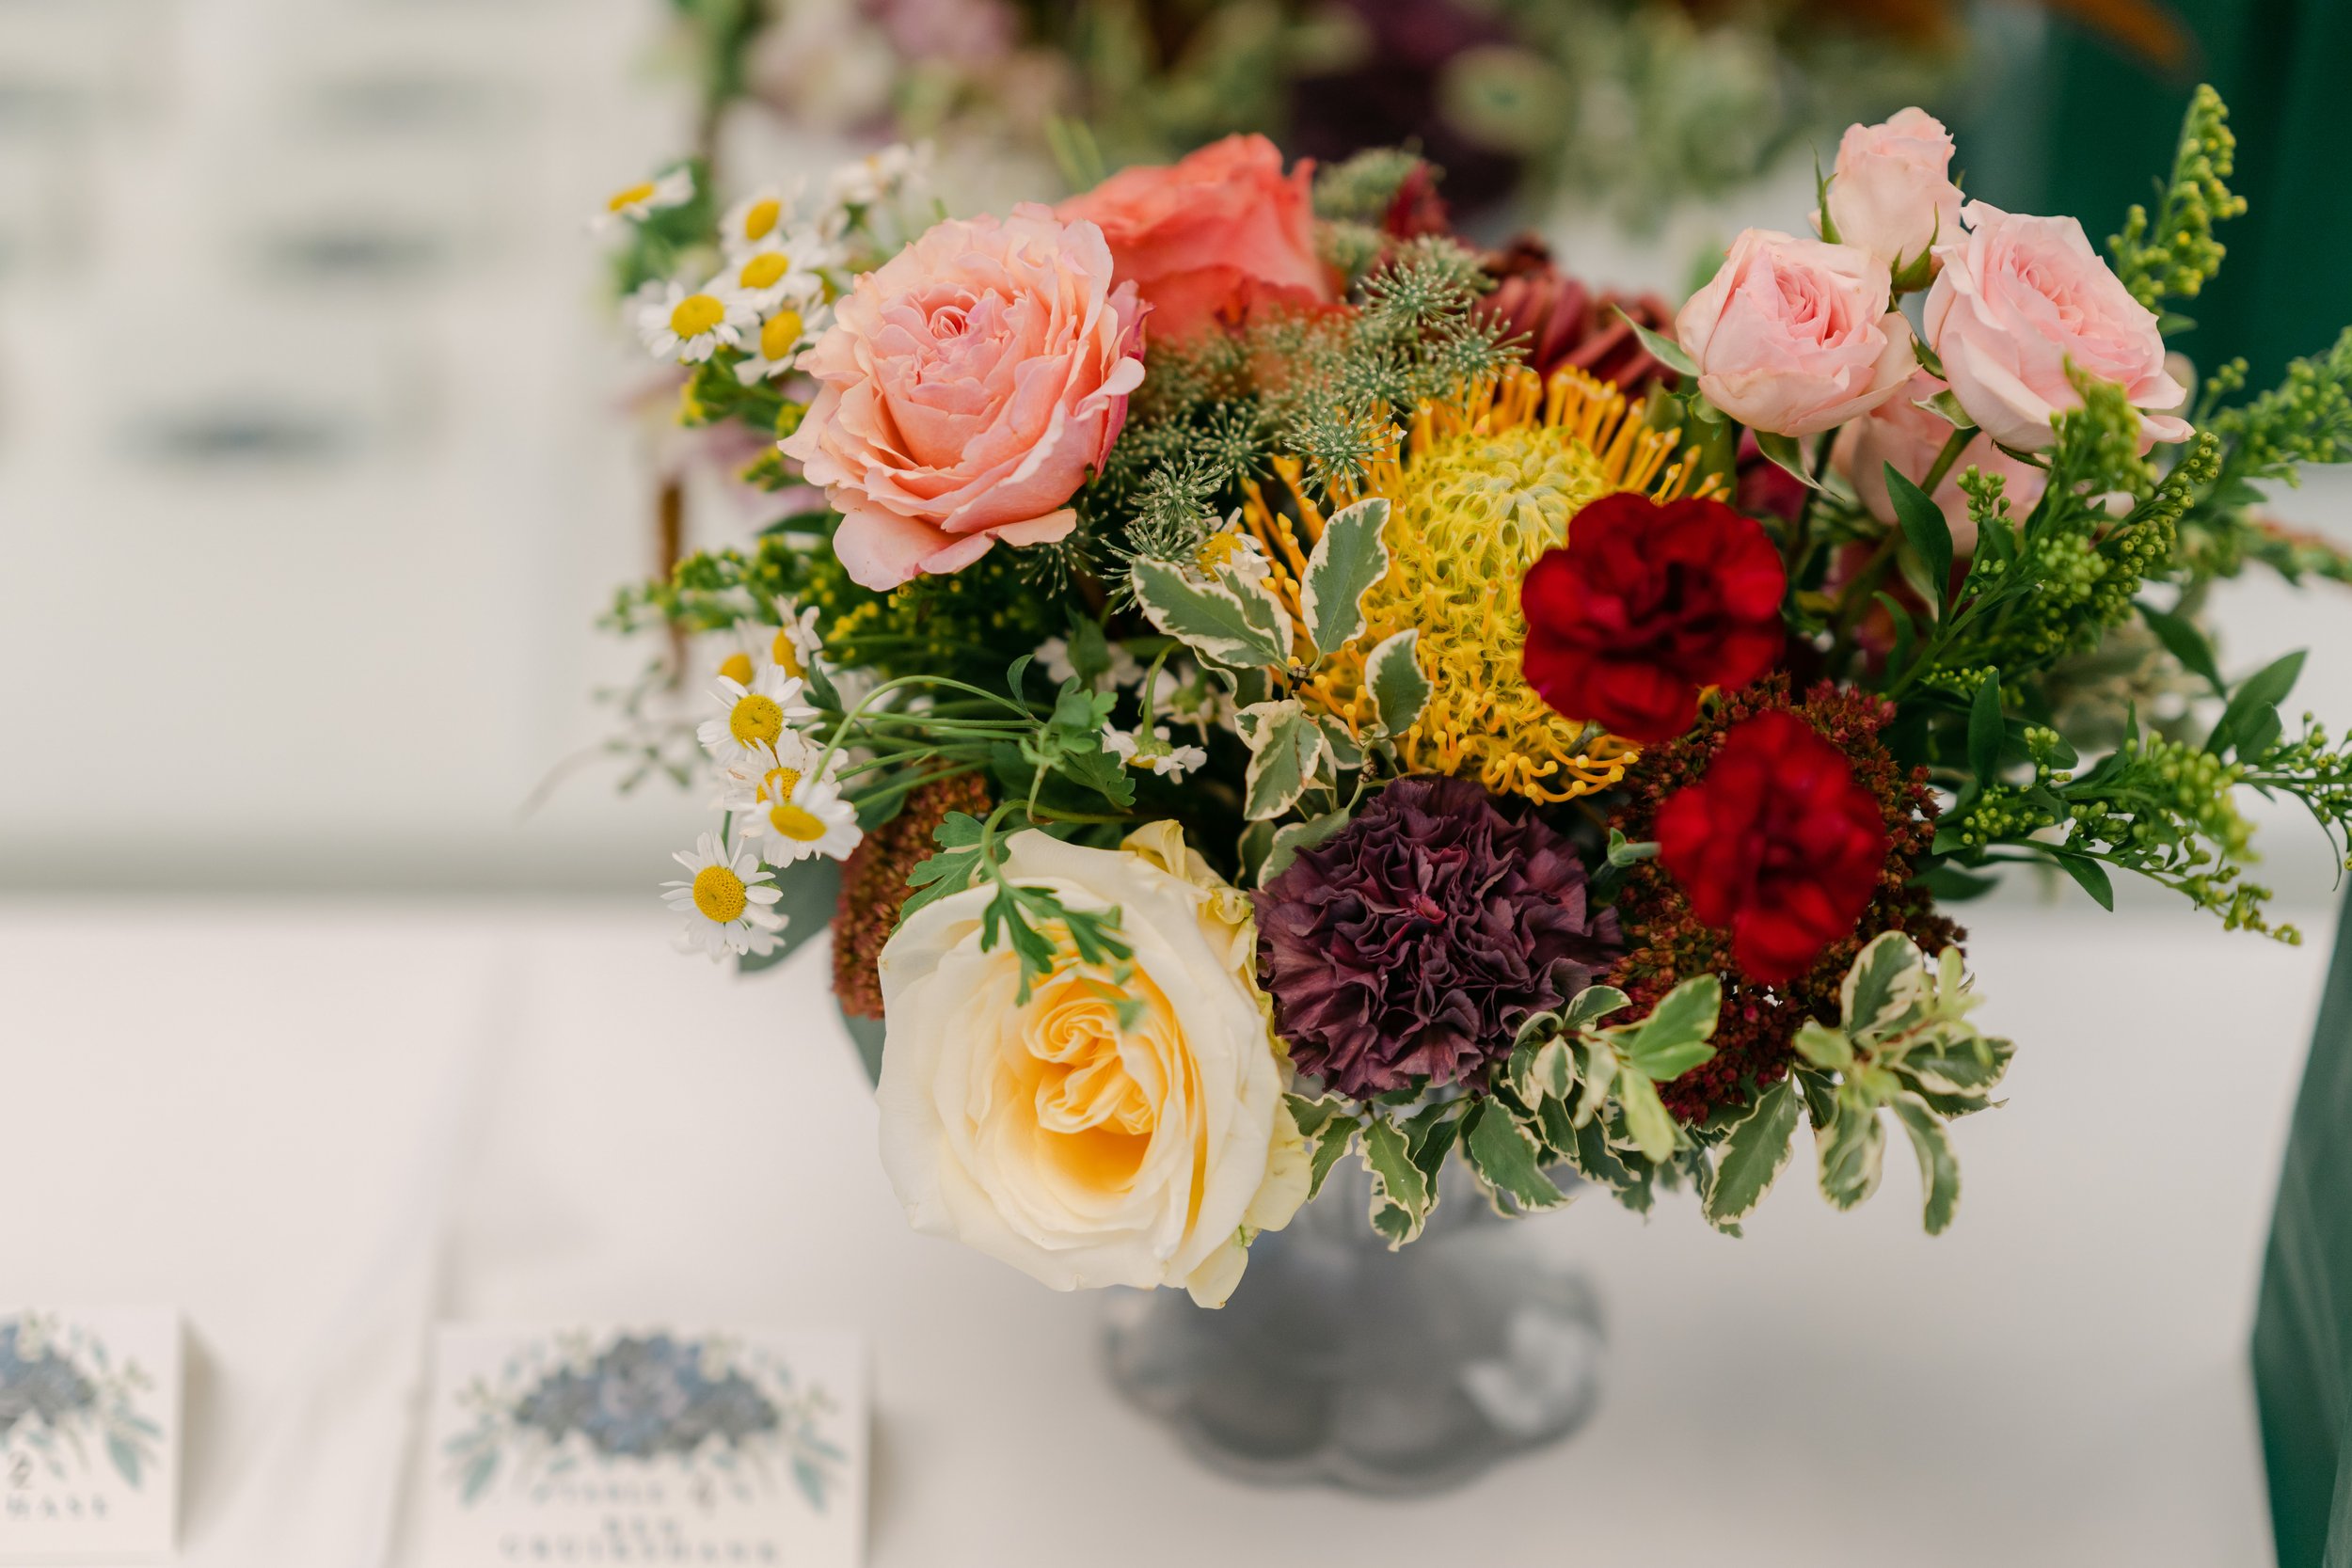 Zingerman's Greyline wedding flowers